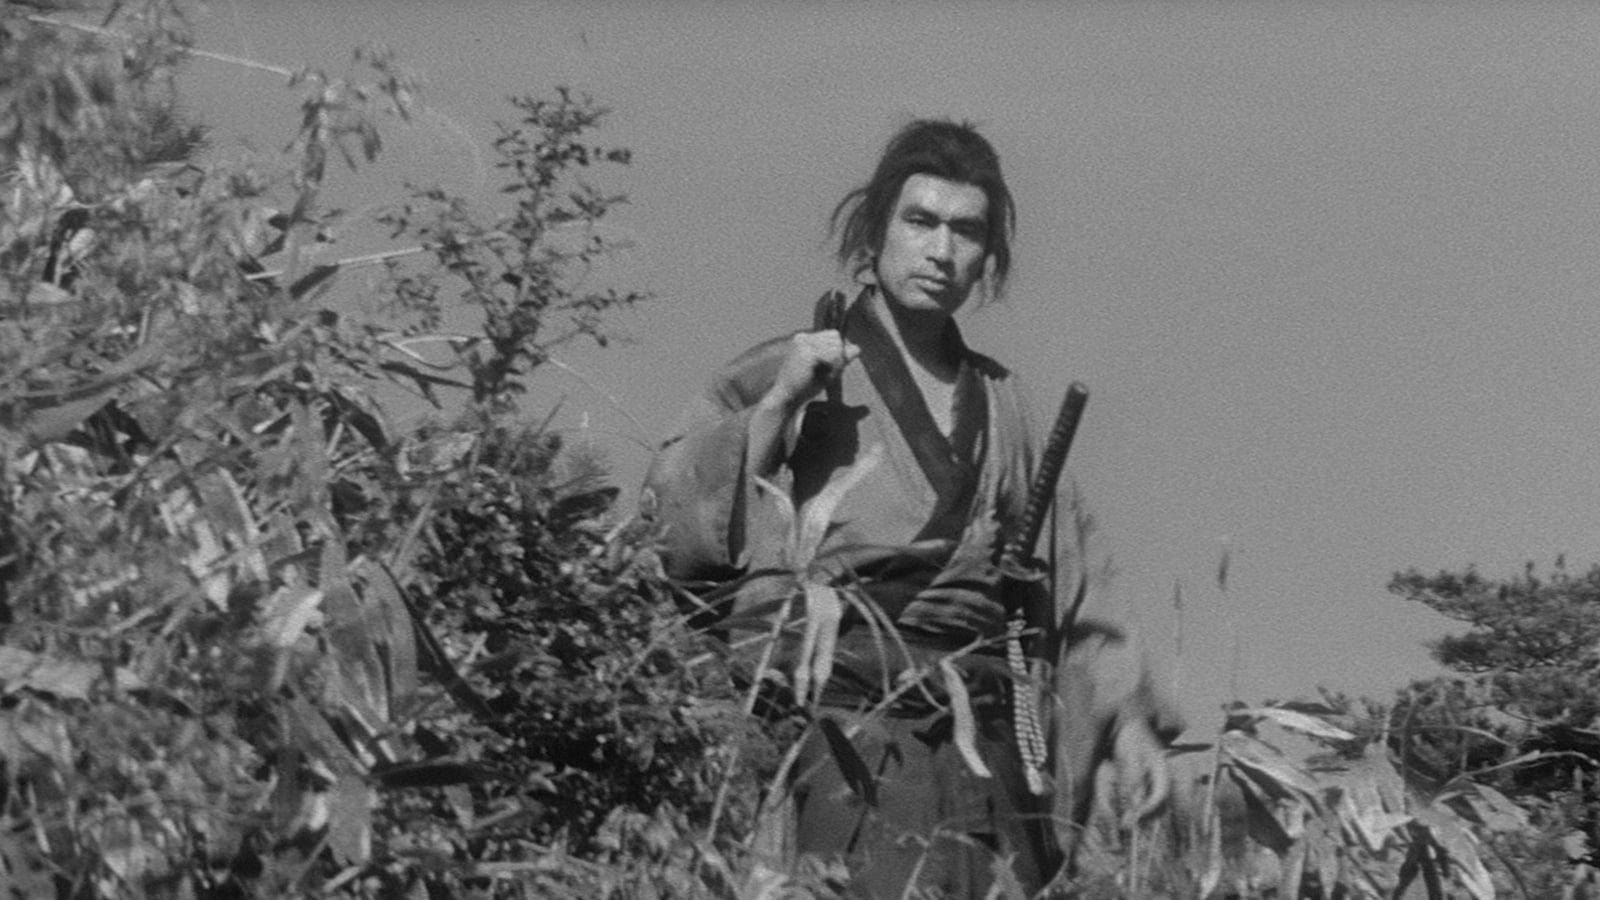 Three Outlaw Samurai backdrop